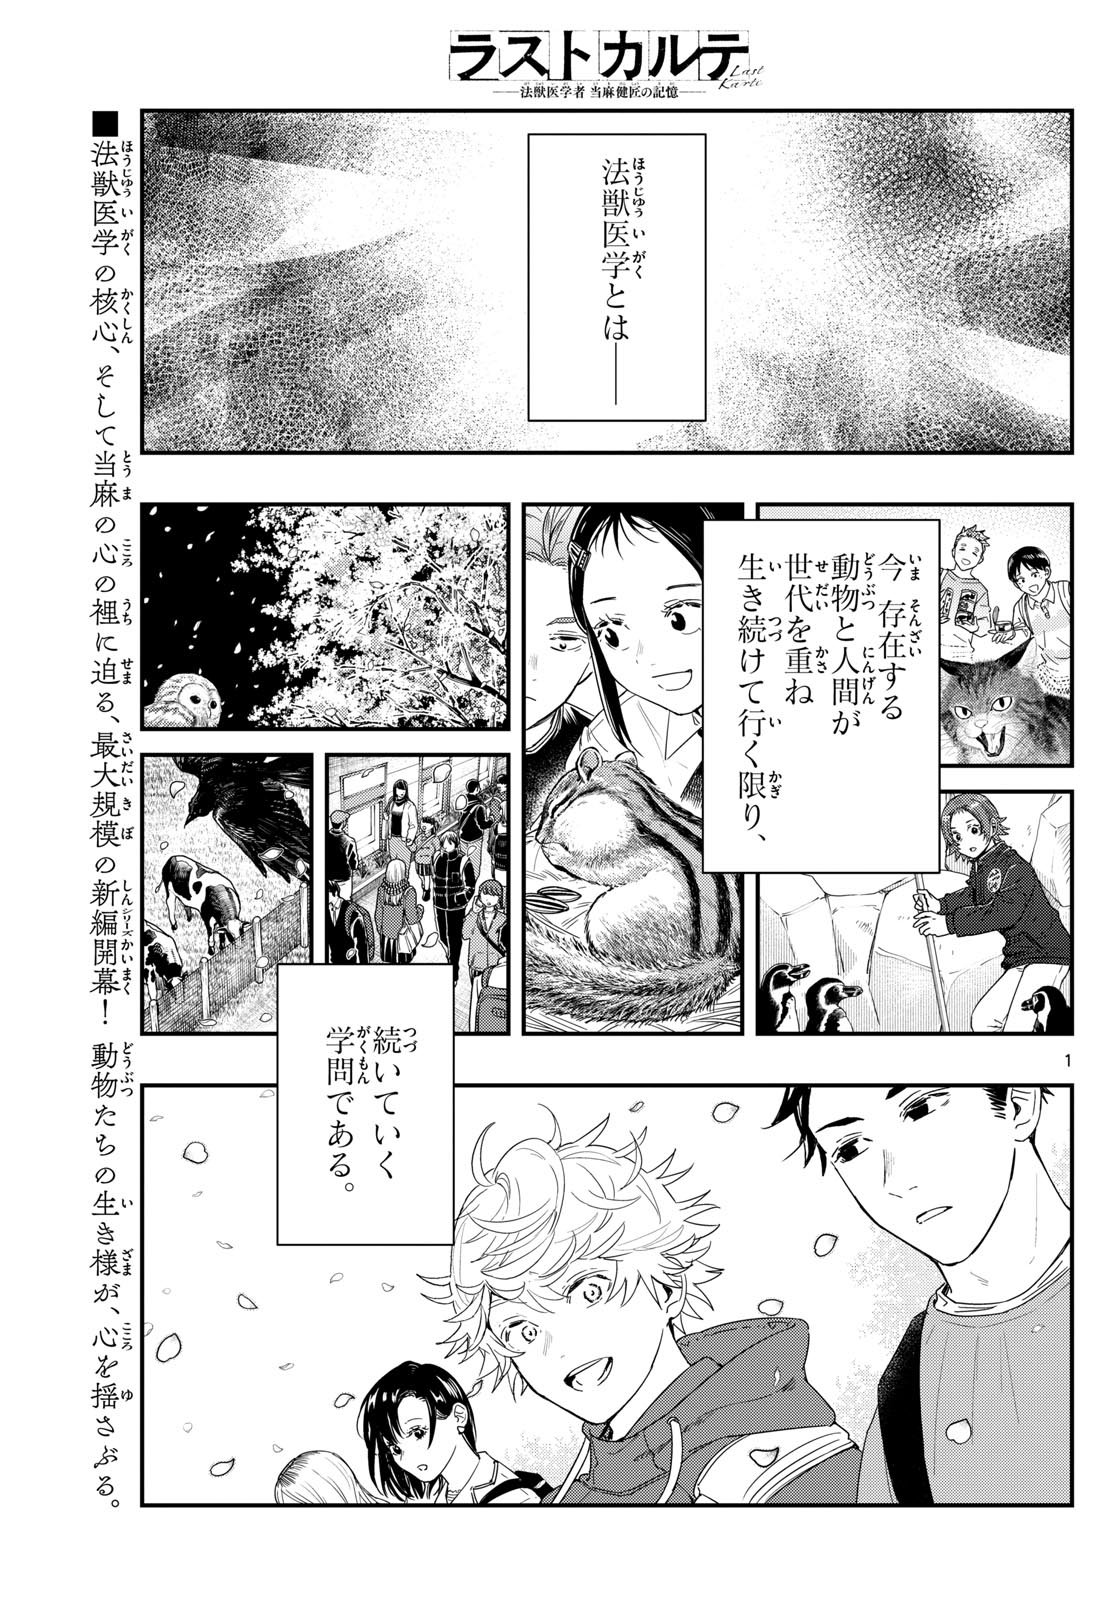 Last Karte – Houjuuigakusha Touma Kenshou no Kioku - Chapter 86 - Page 1